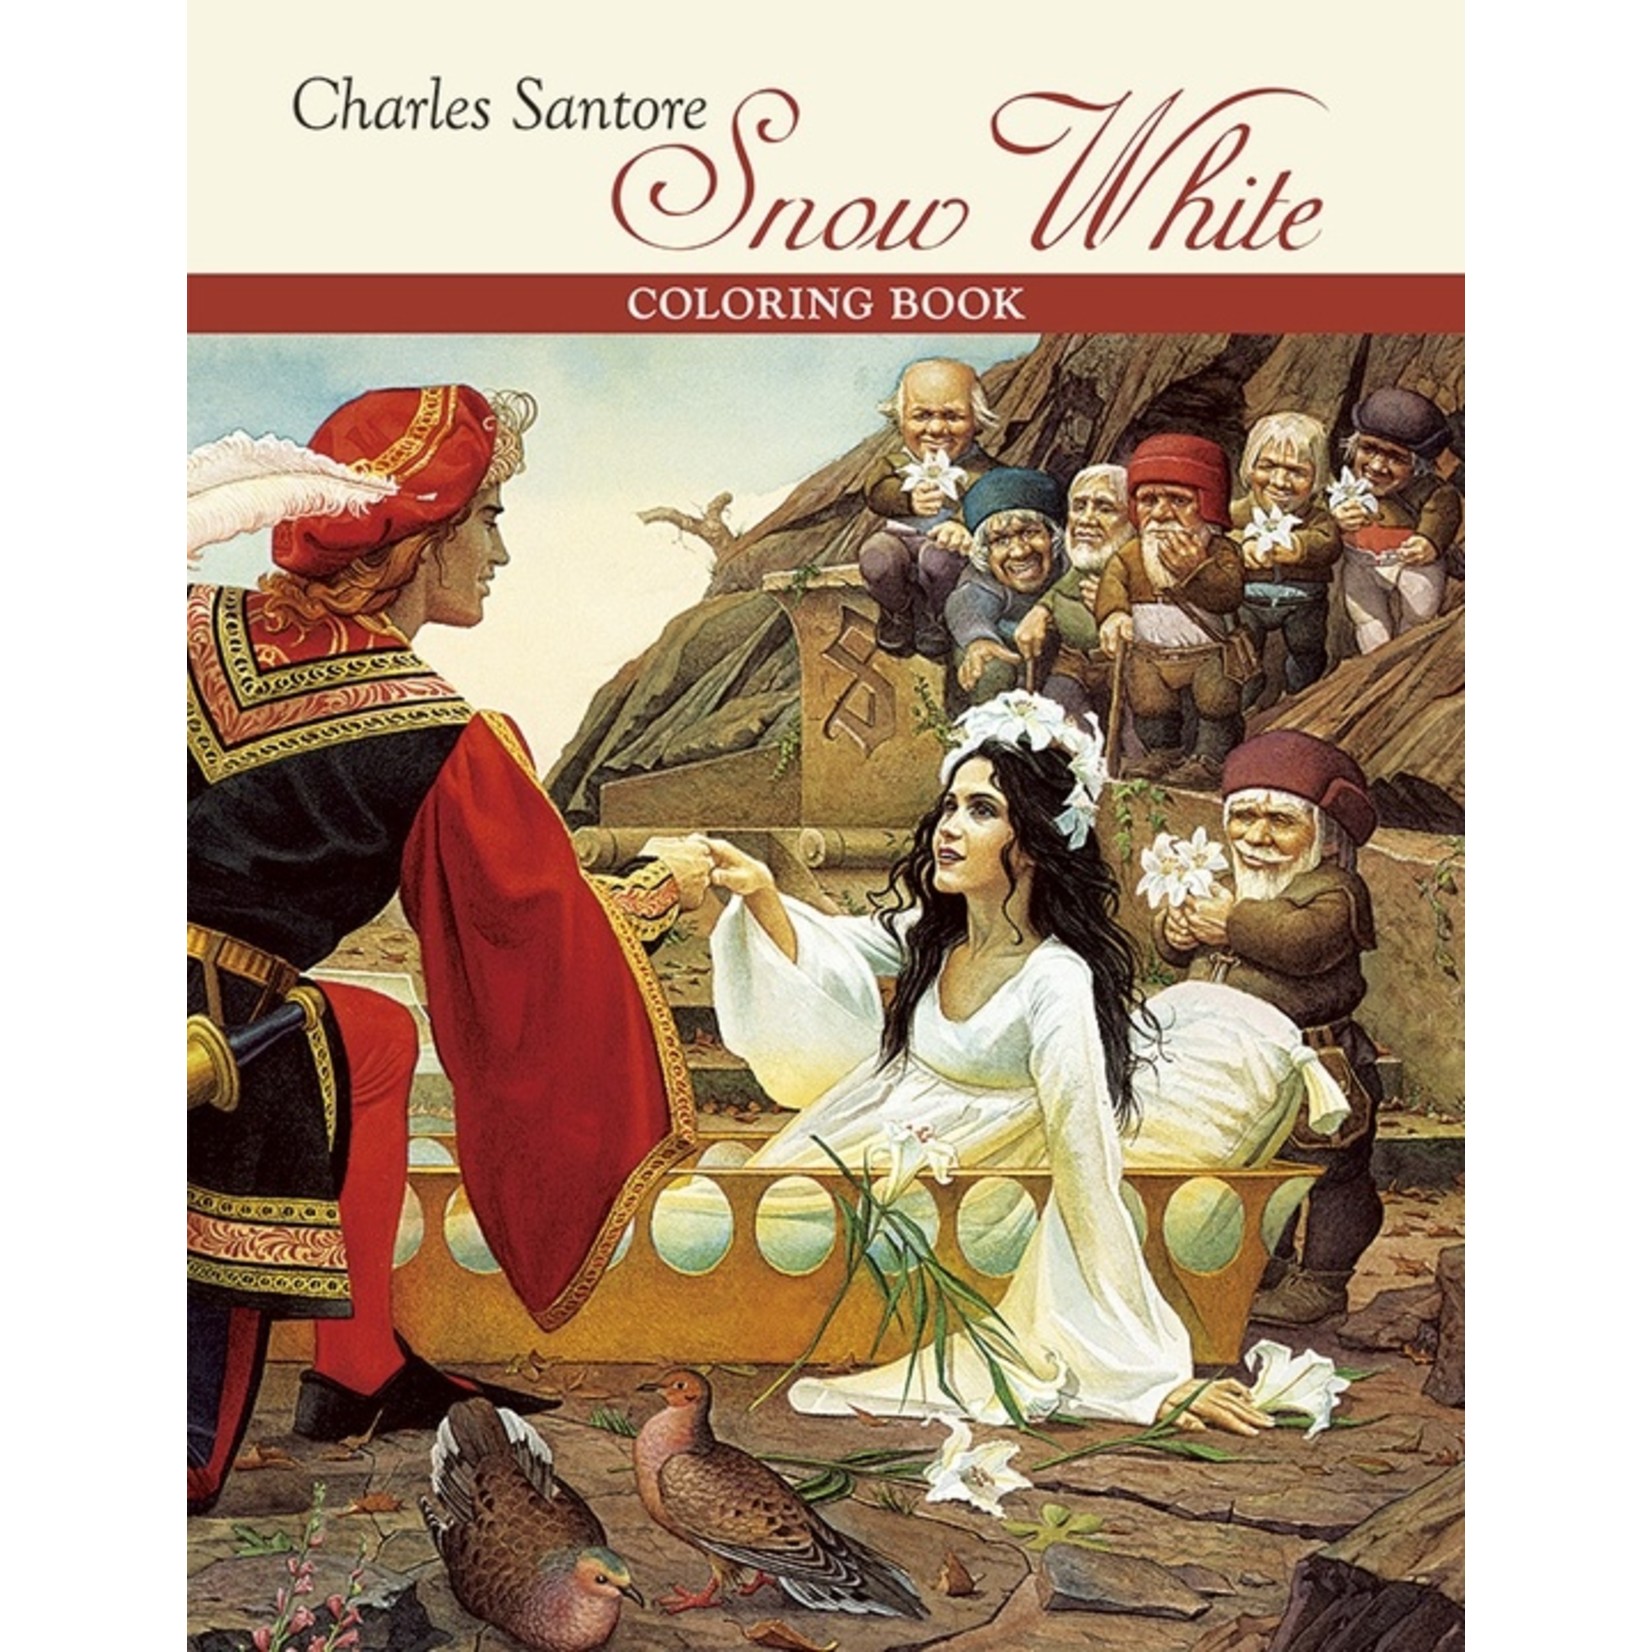 Coloring Book - Samptre -Snow White